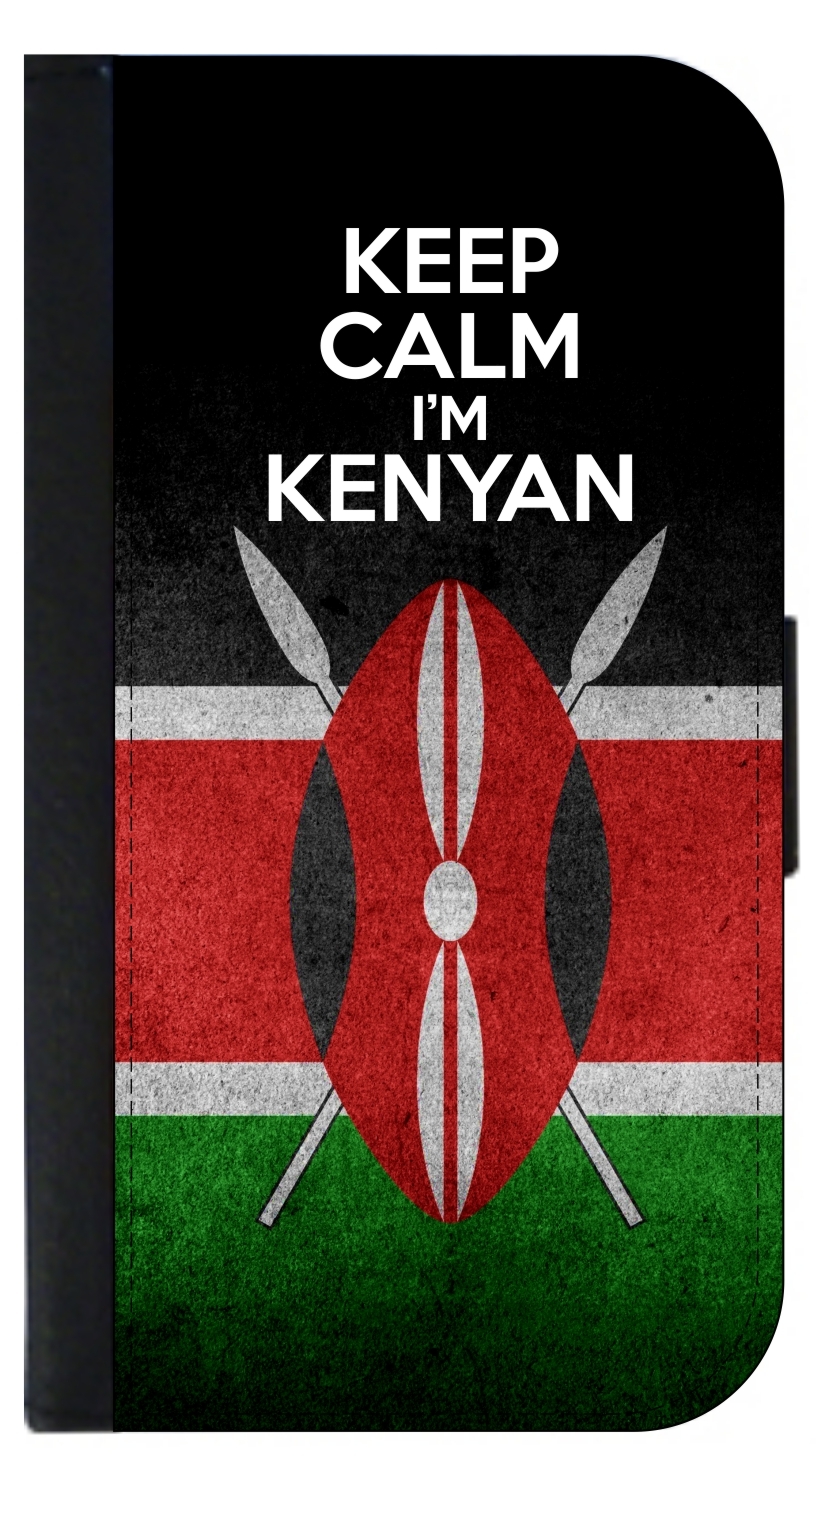 Flag Kenya - Keep Calm I'm Kenya Flag Galaxy s10p Case - Galaxy s10 Plus Case - Galaxy s10 Plus Wallet Case - s10 Plus Case Wallet - Galaxy s10 Plus Case Wallet - s10 Plus Case Flip Cover - image 1 of 3